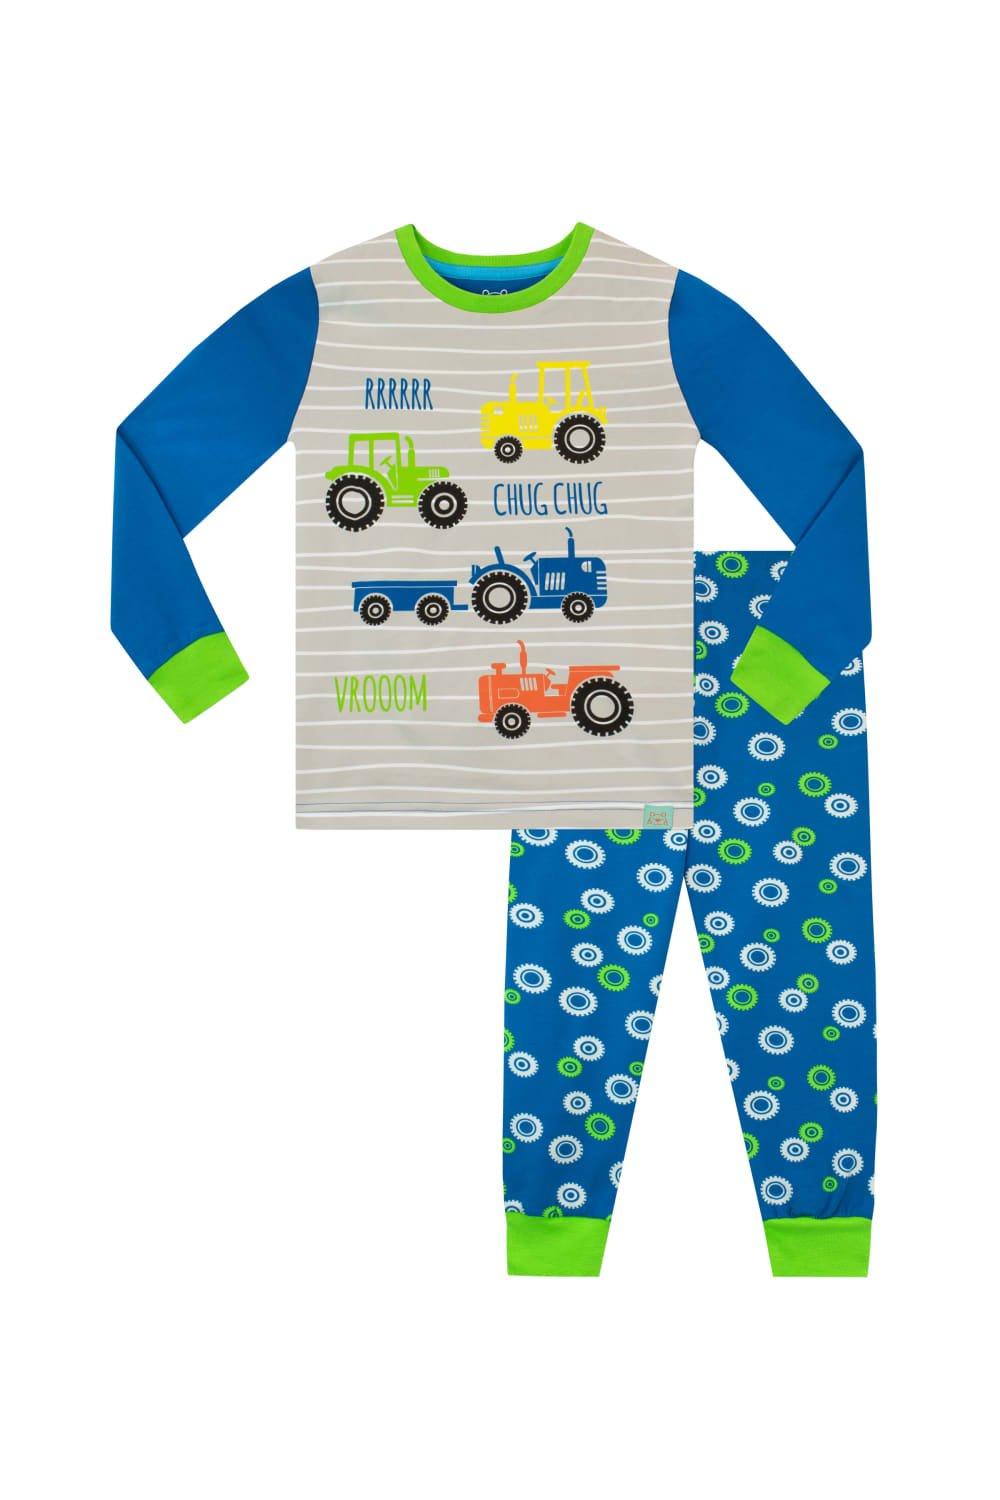 Tractor Wheels Print Pyjamas